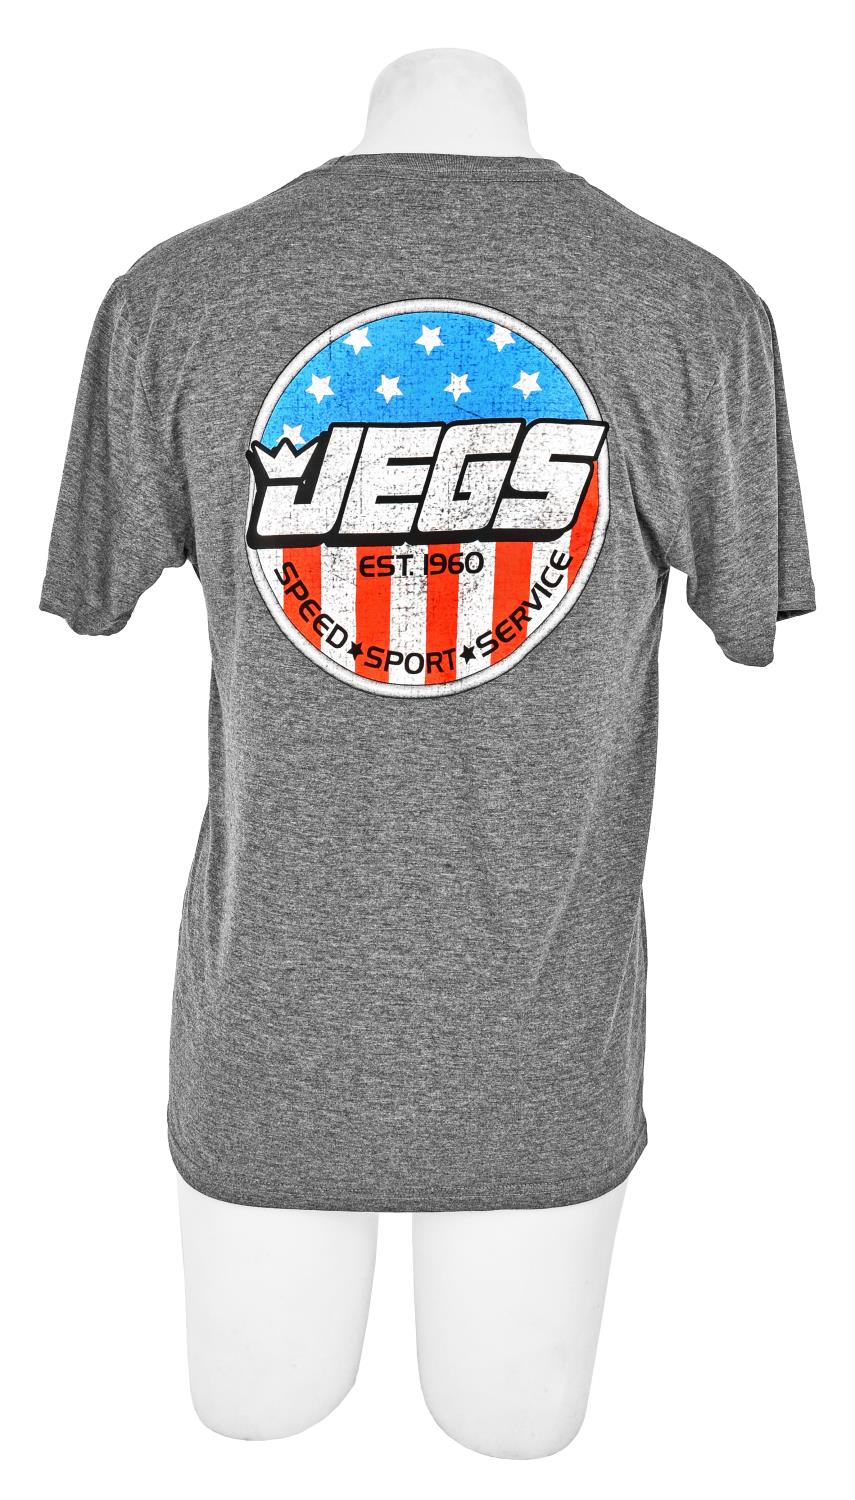 JEGS Flag Speed-Sport-Service T-Shirt